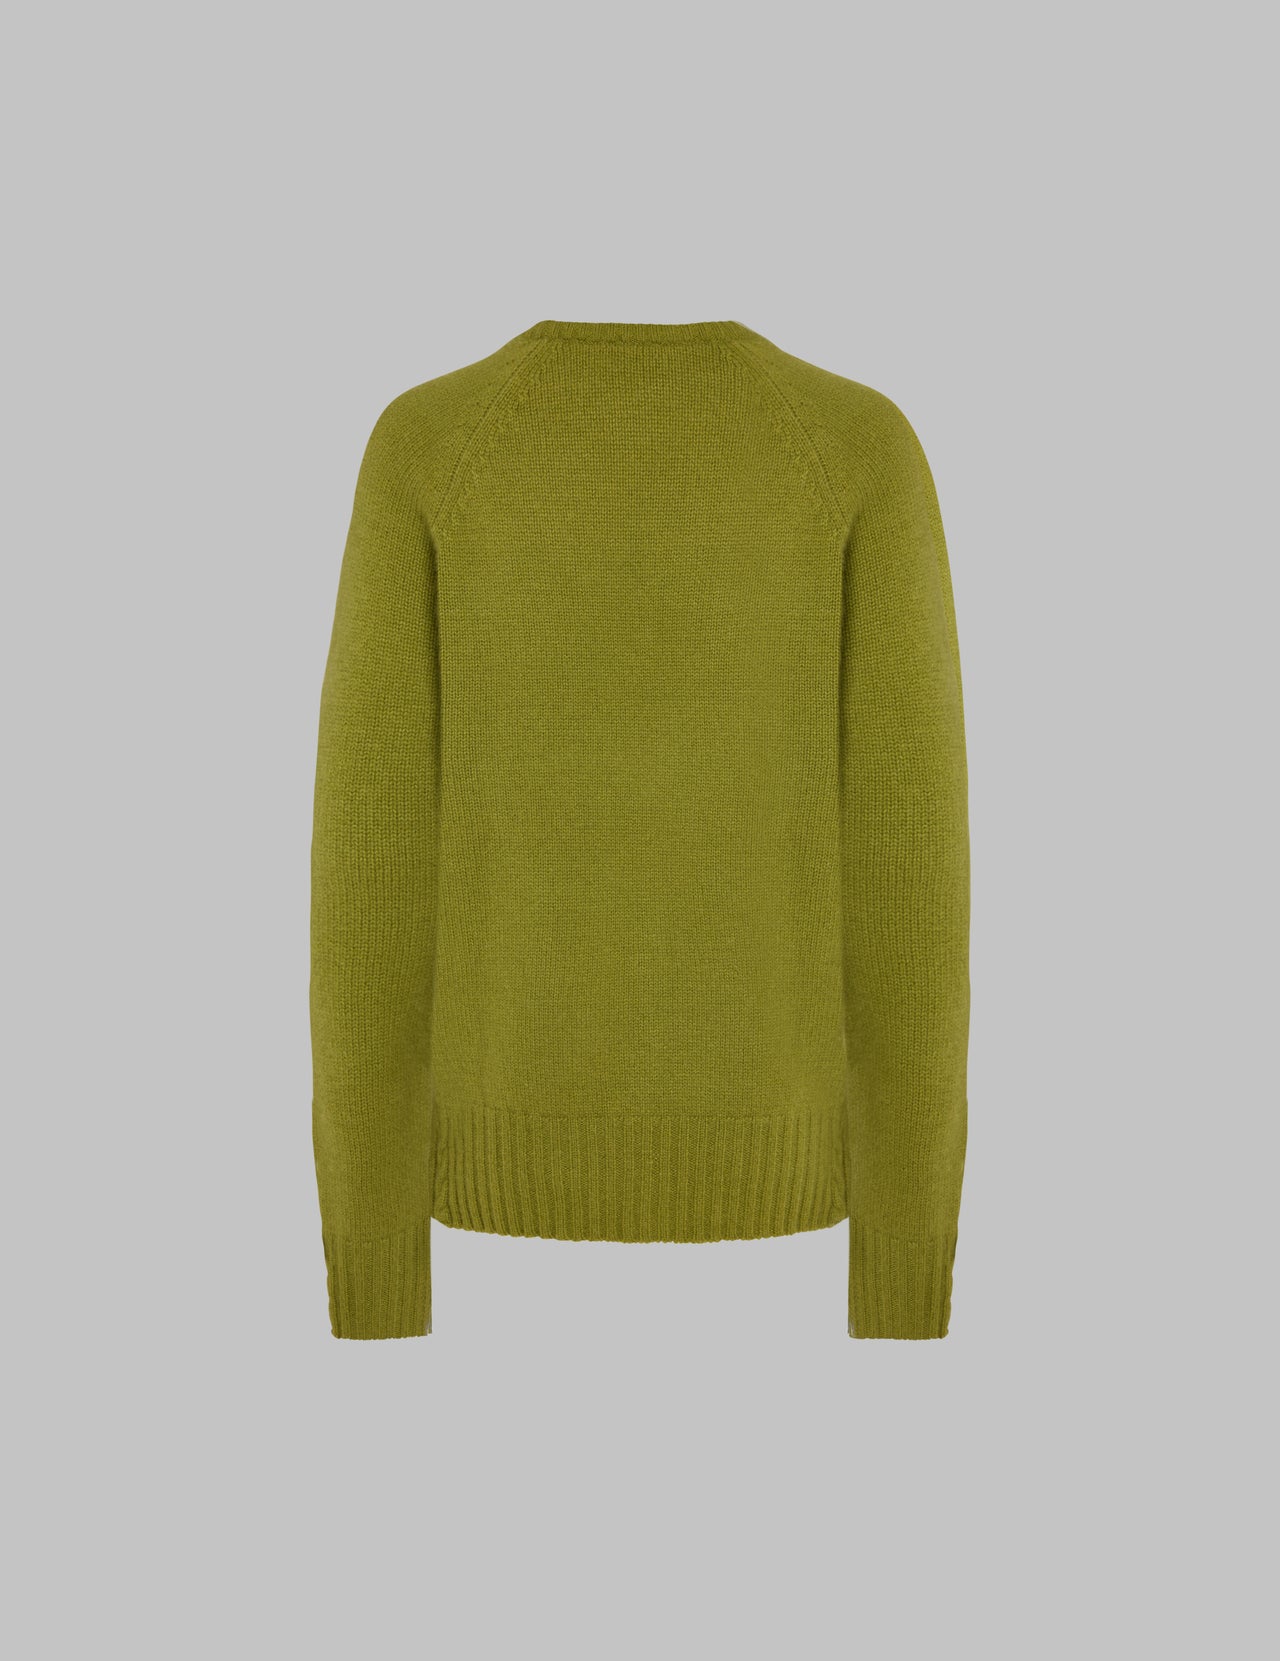  Green Cashmere Crew Neck Sweater 